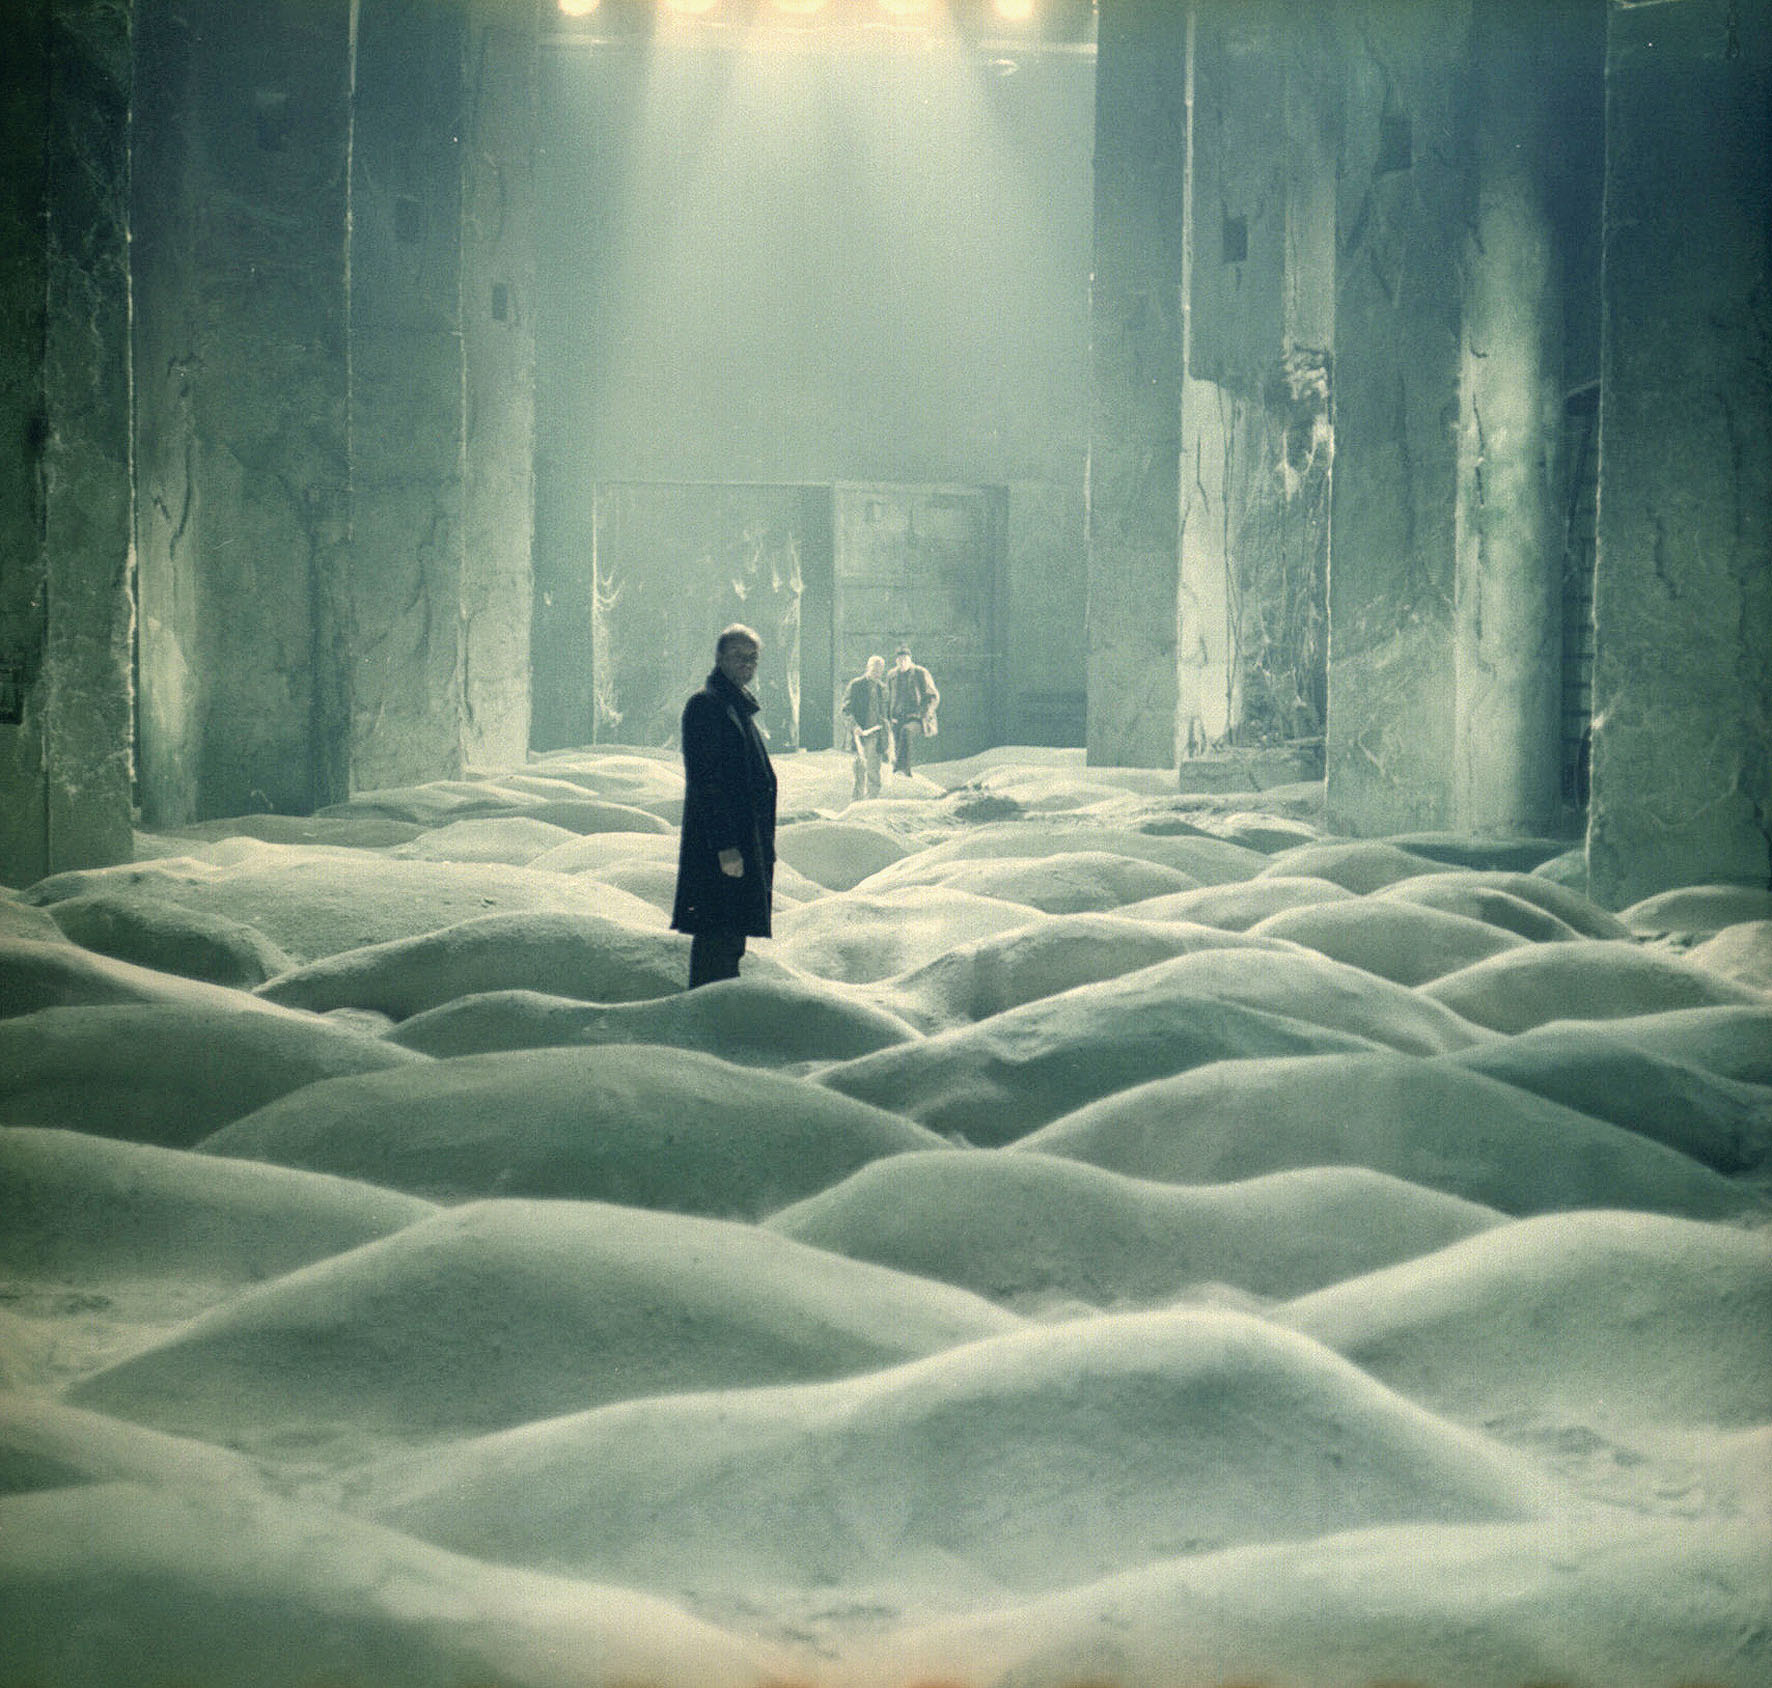 Le film "Stalker" d'Andrei Tarkovski (1979) - agauche.org